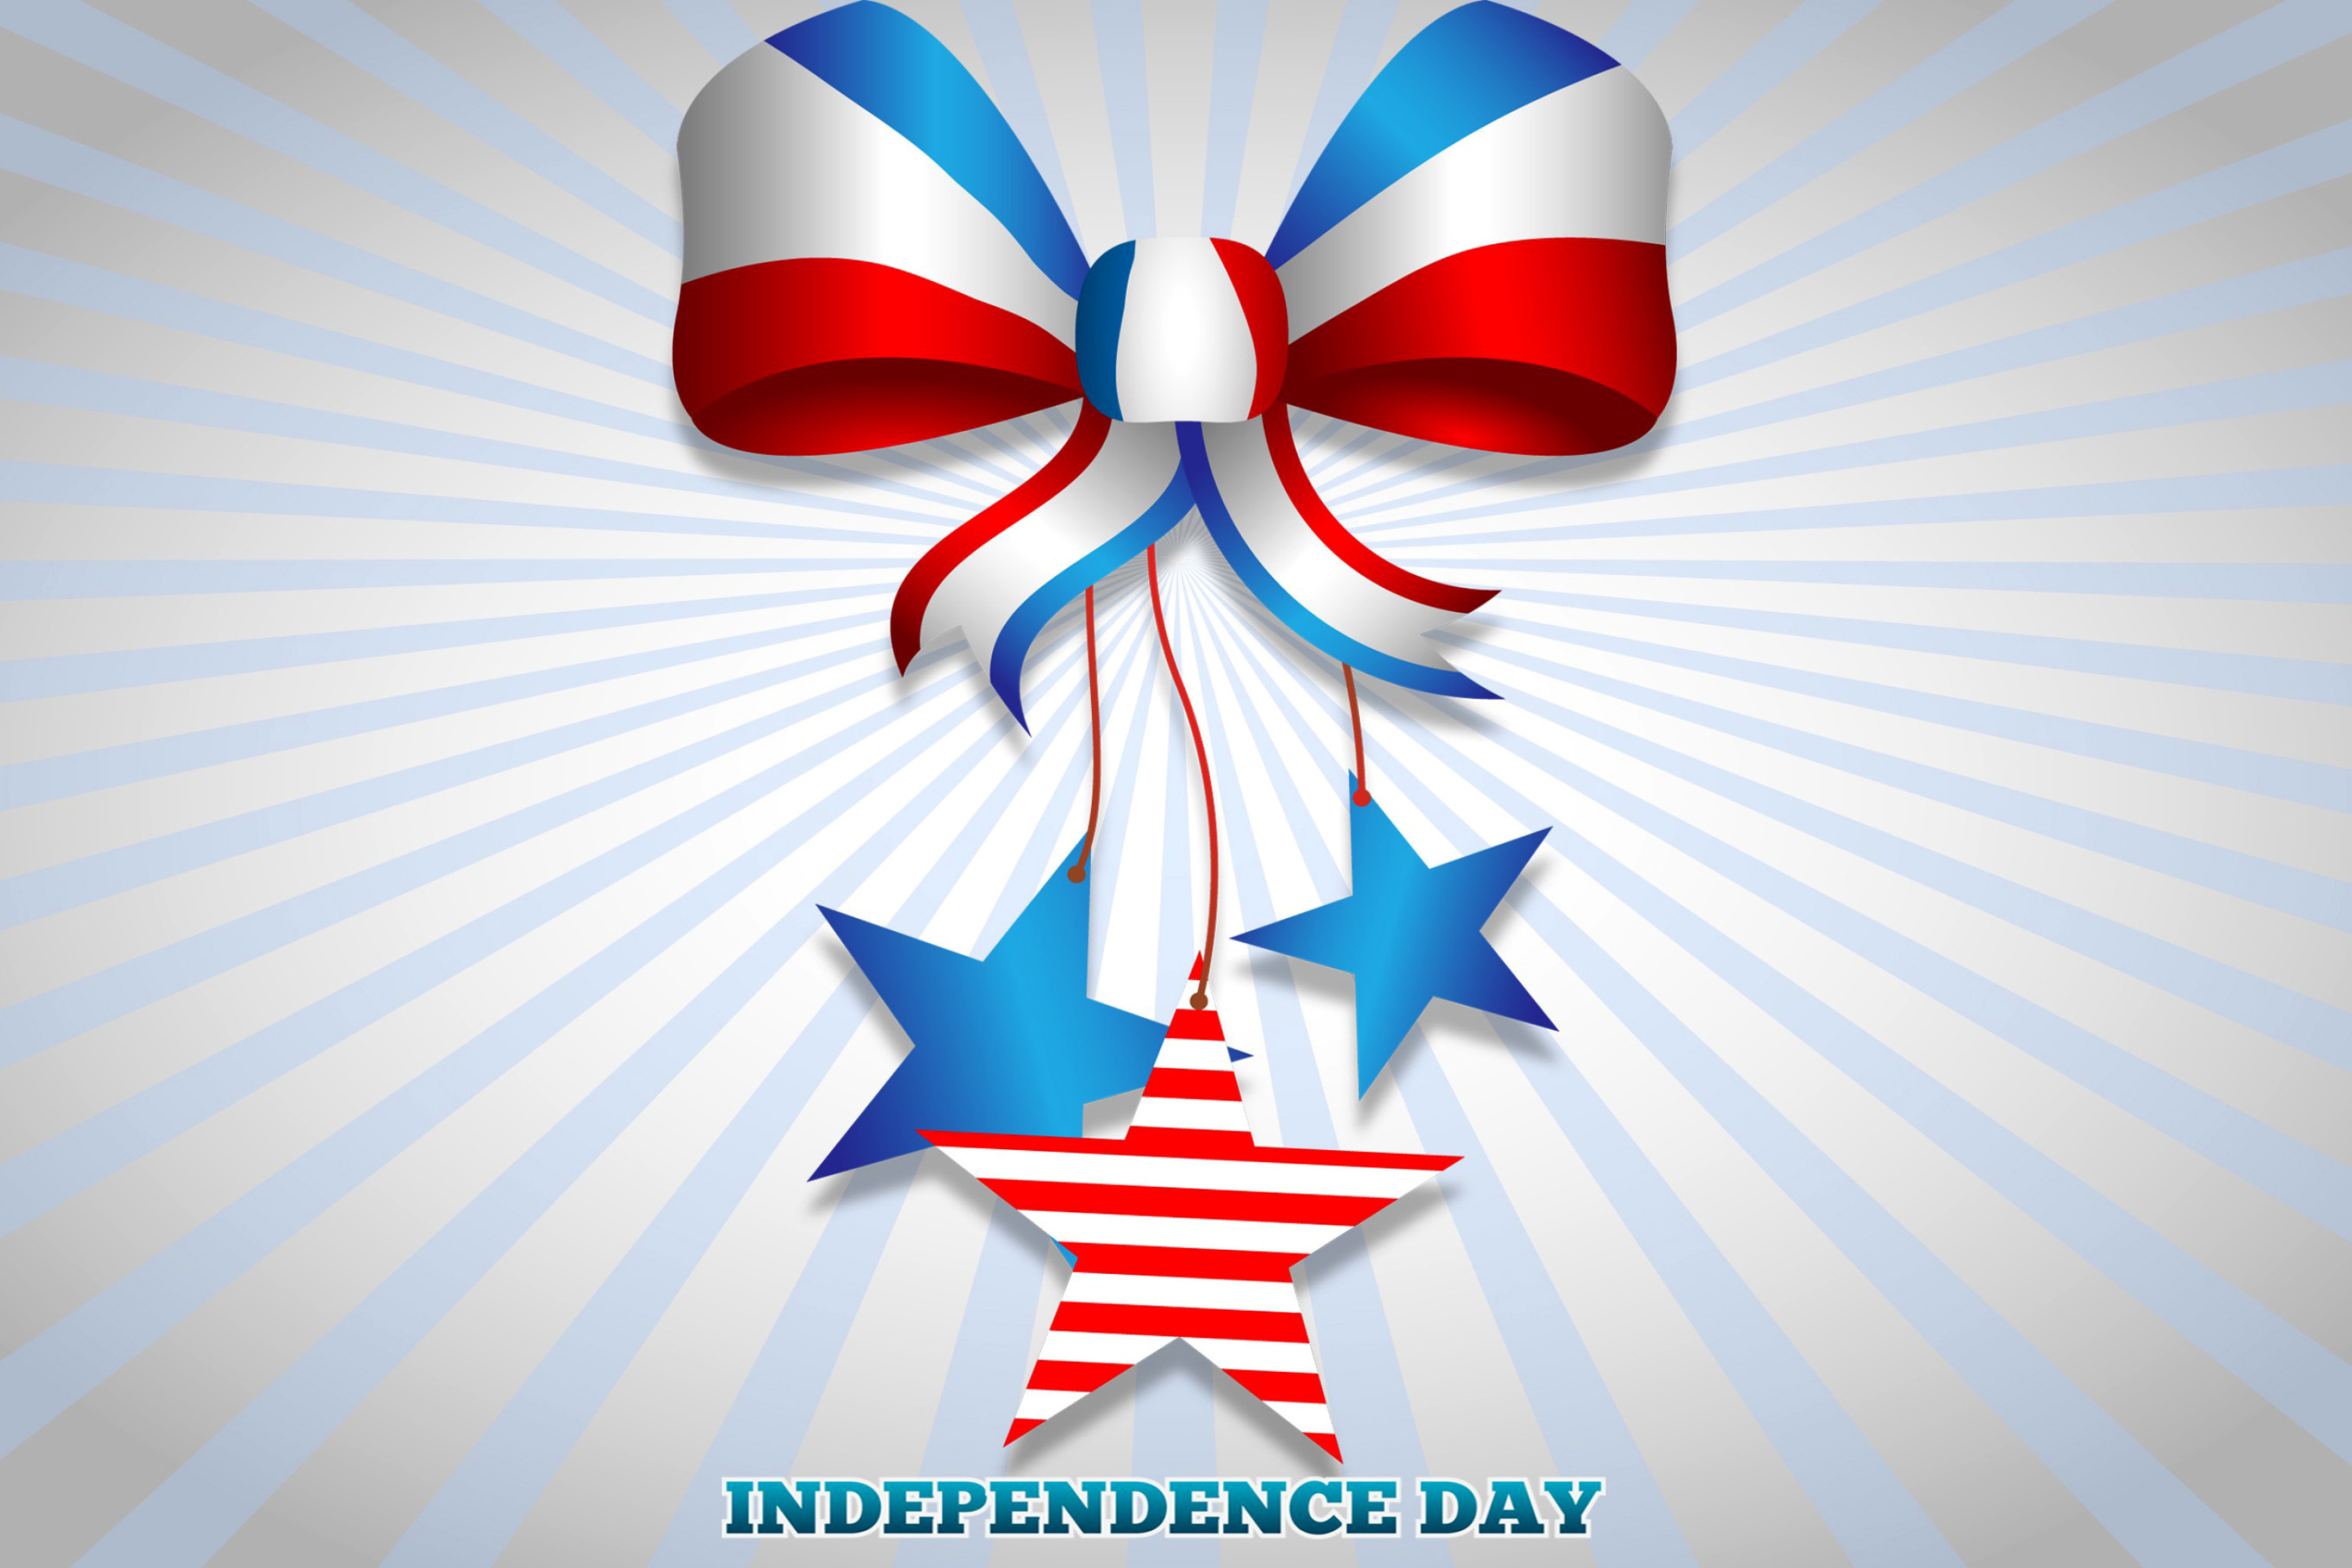 Обои United states america Idependence day 4th july 2880x1920